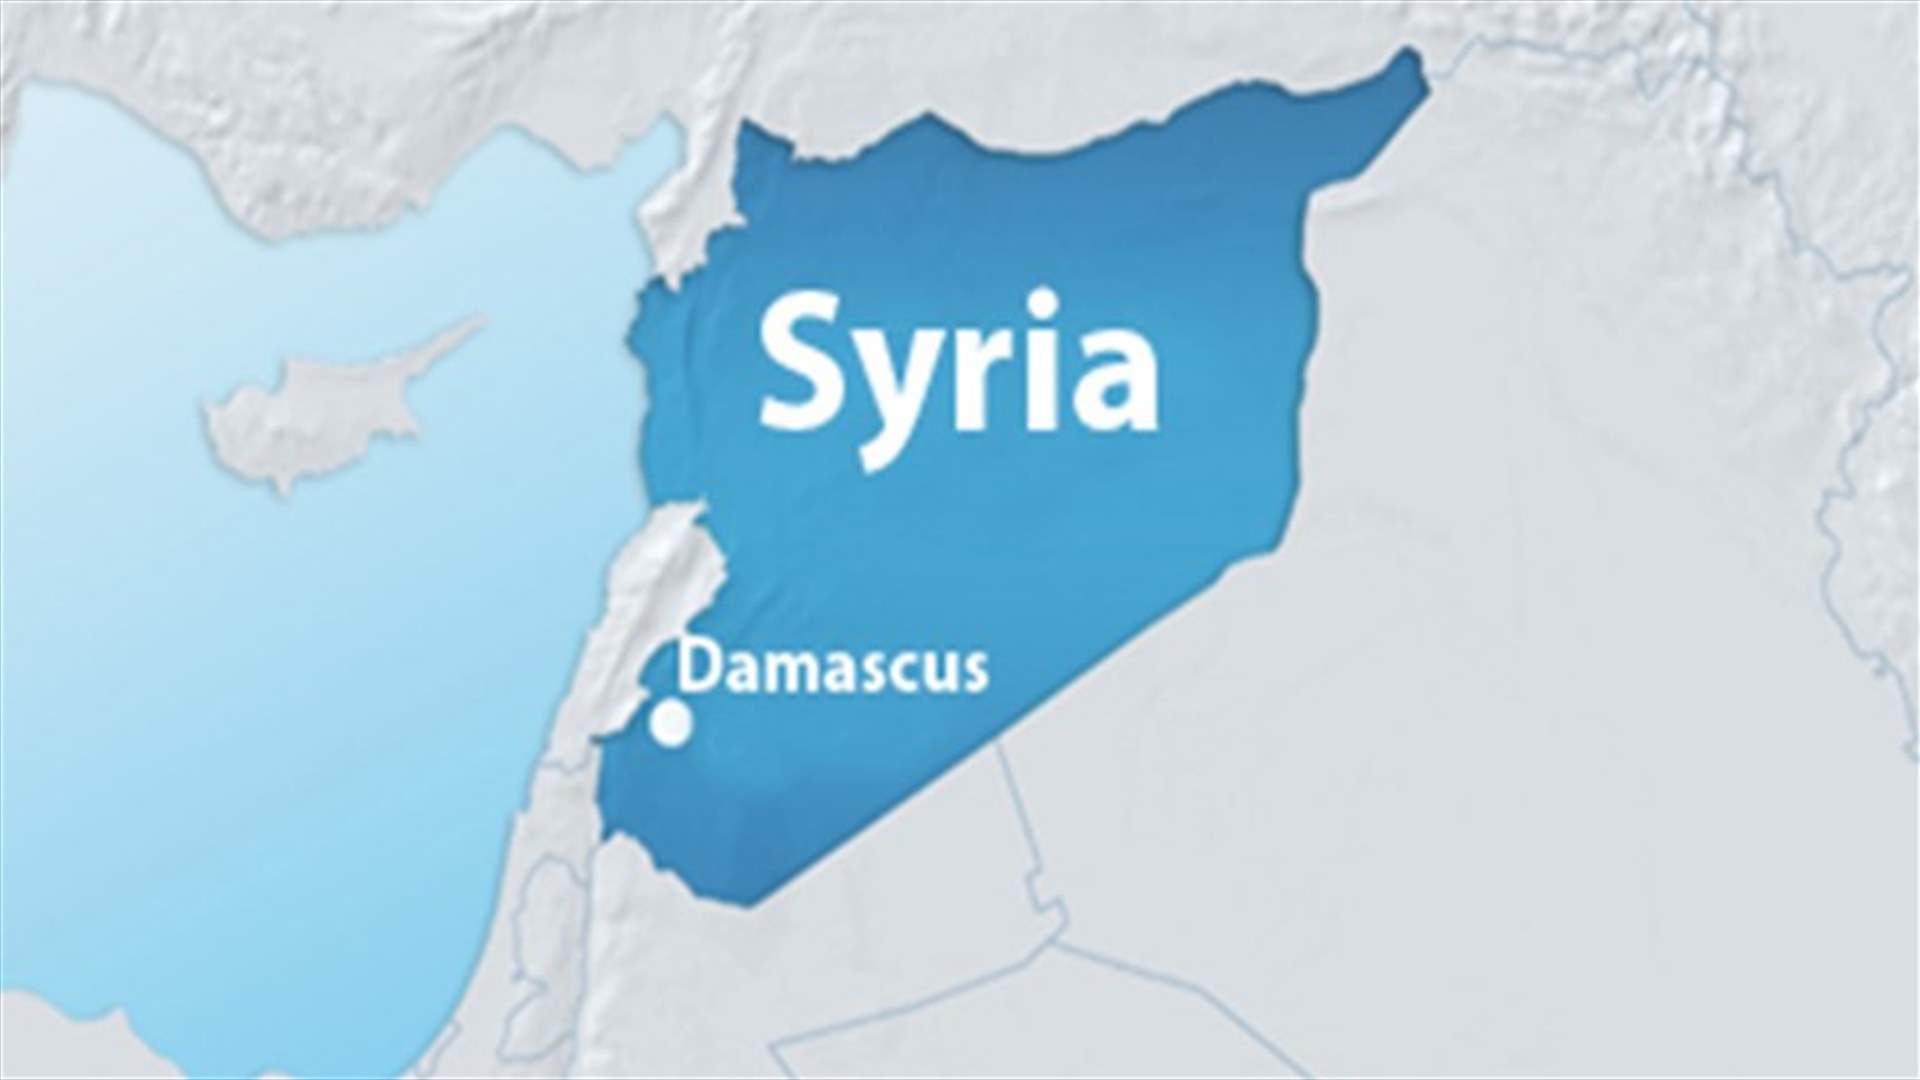 Twin bomb blasts kill dozens in Syria&#39;s Homs - monitoring group